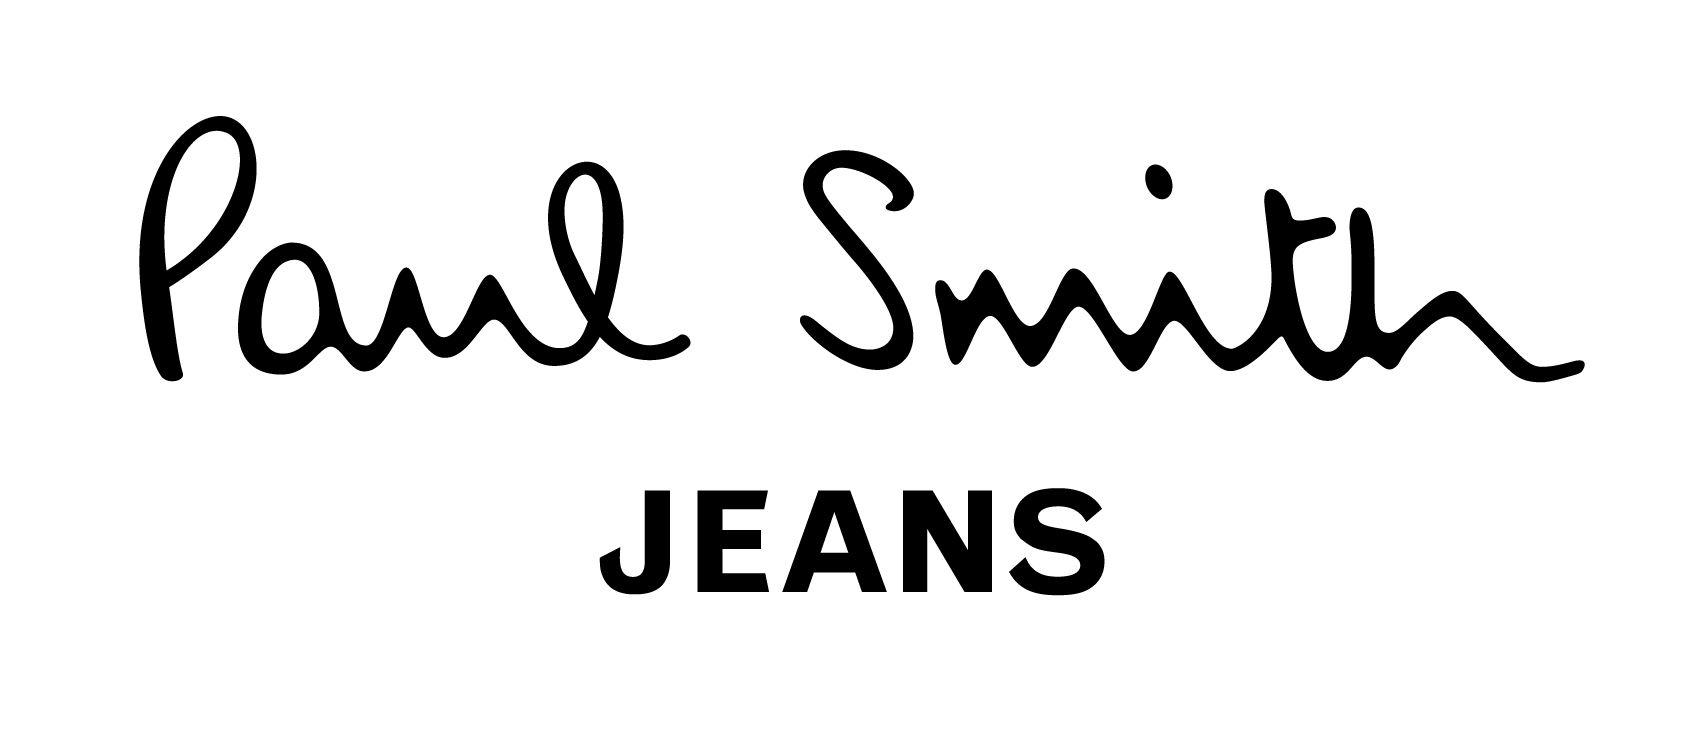 Top Clothing Company Logo - 15 Top Designer Jeans Brands and Logos - BrandonGaille.com